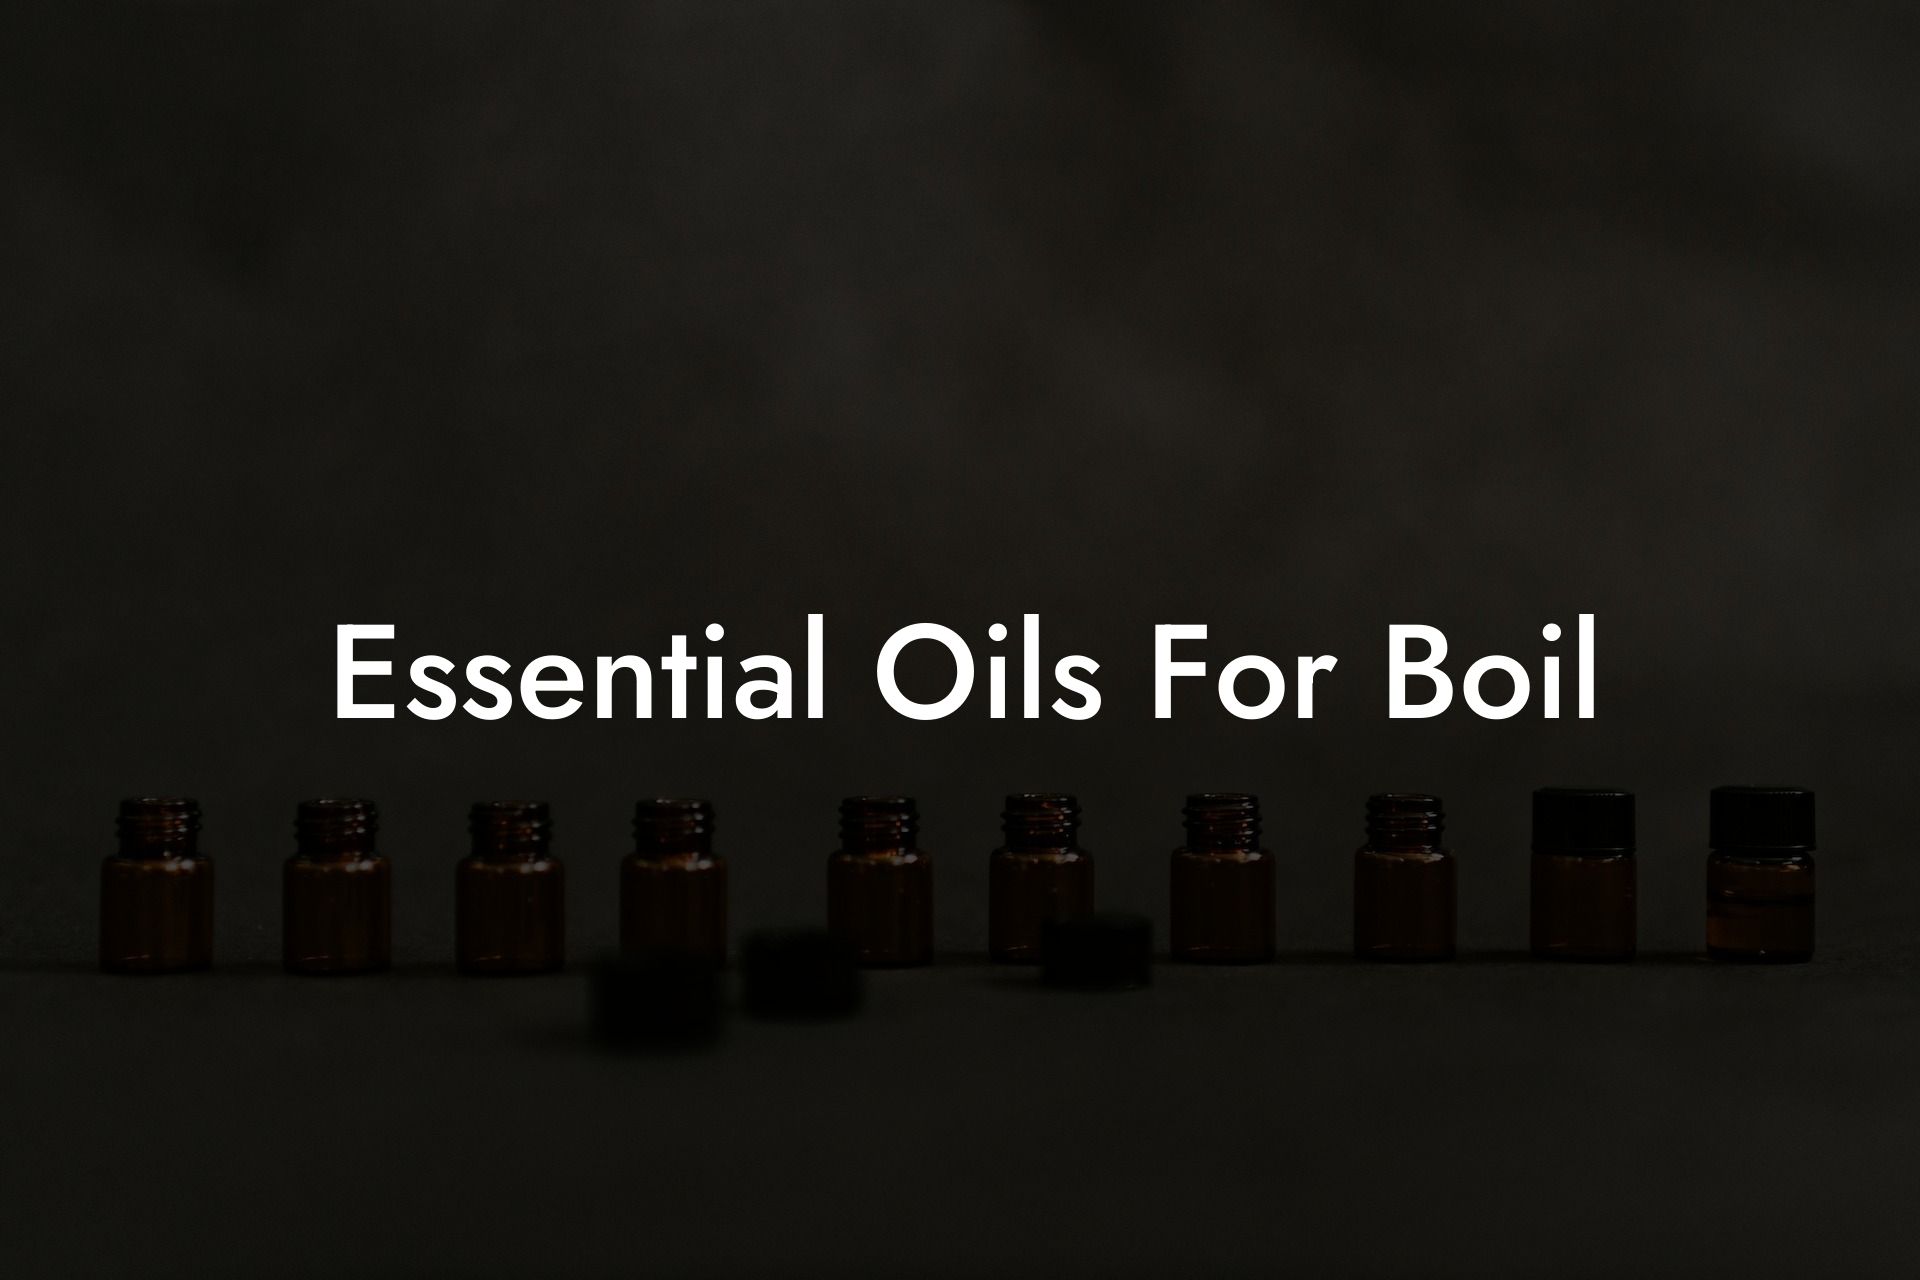 Essential Oils For Boil